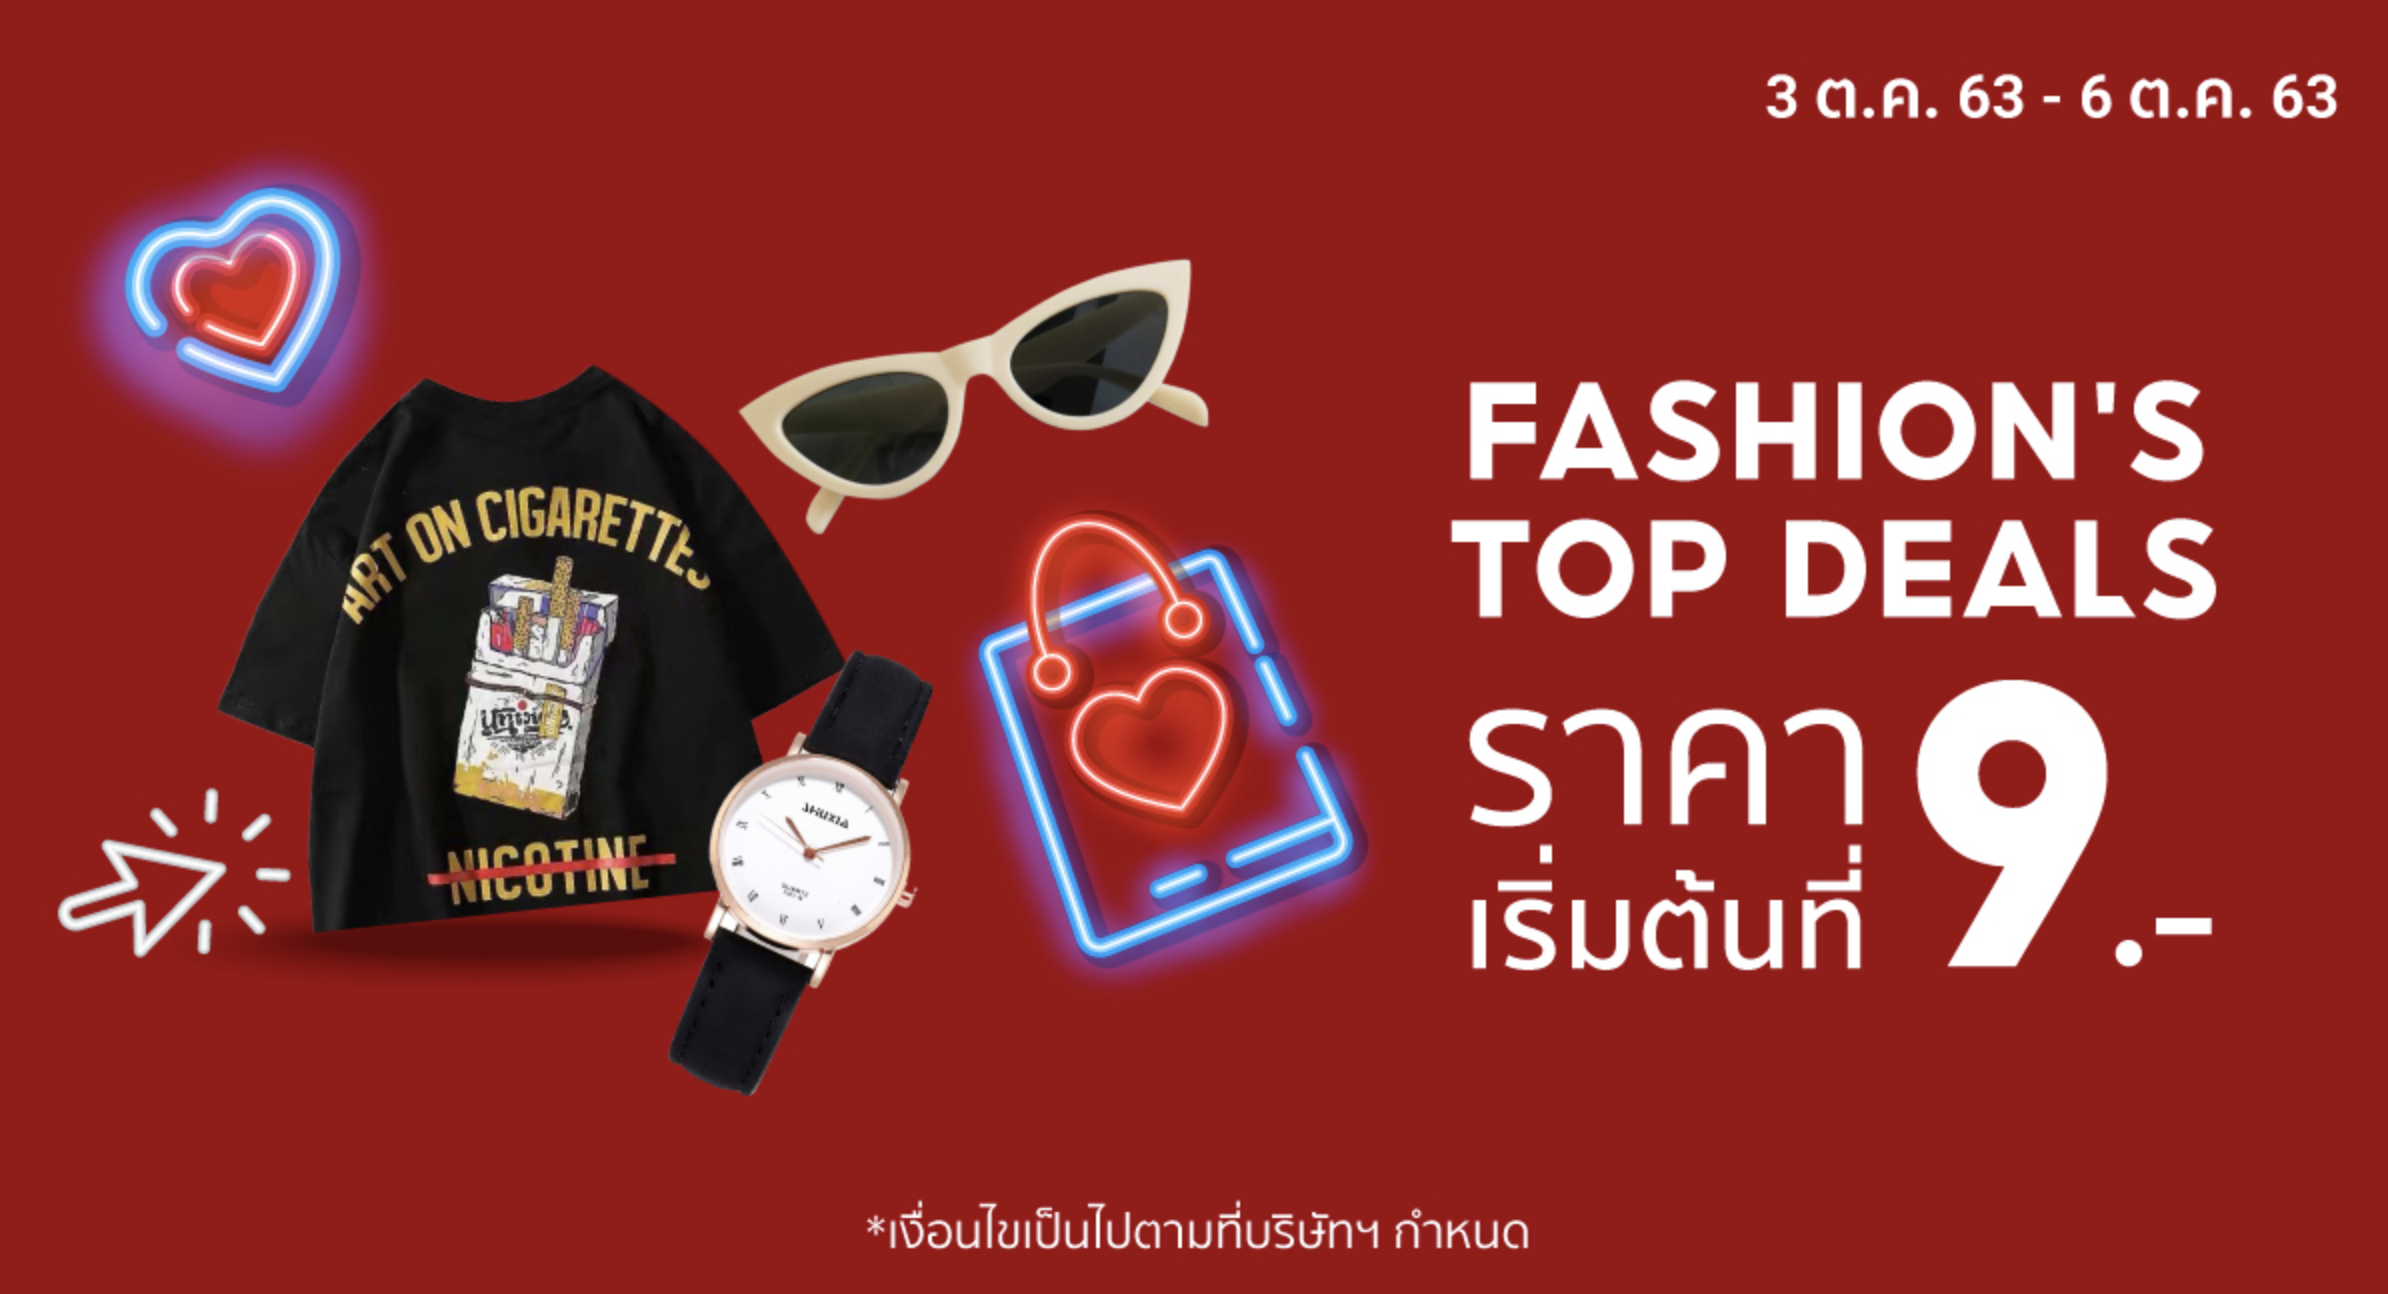 shopee-fashion-top-deals-9baht